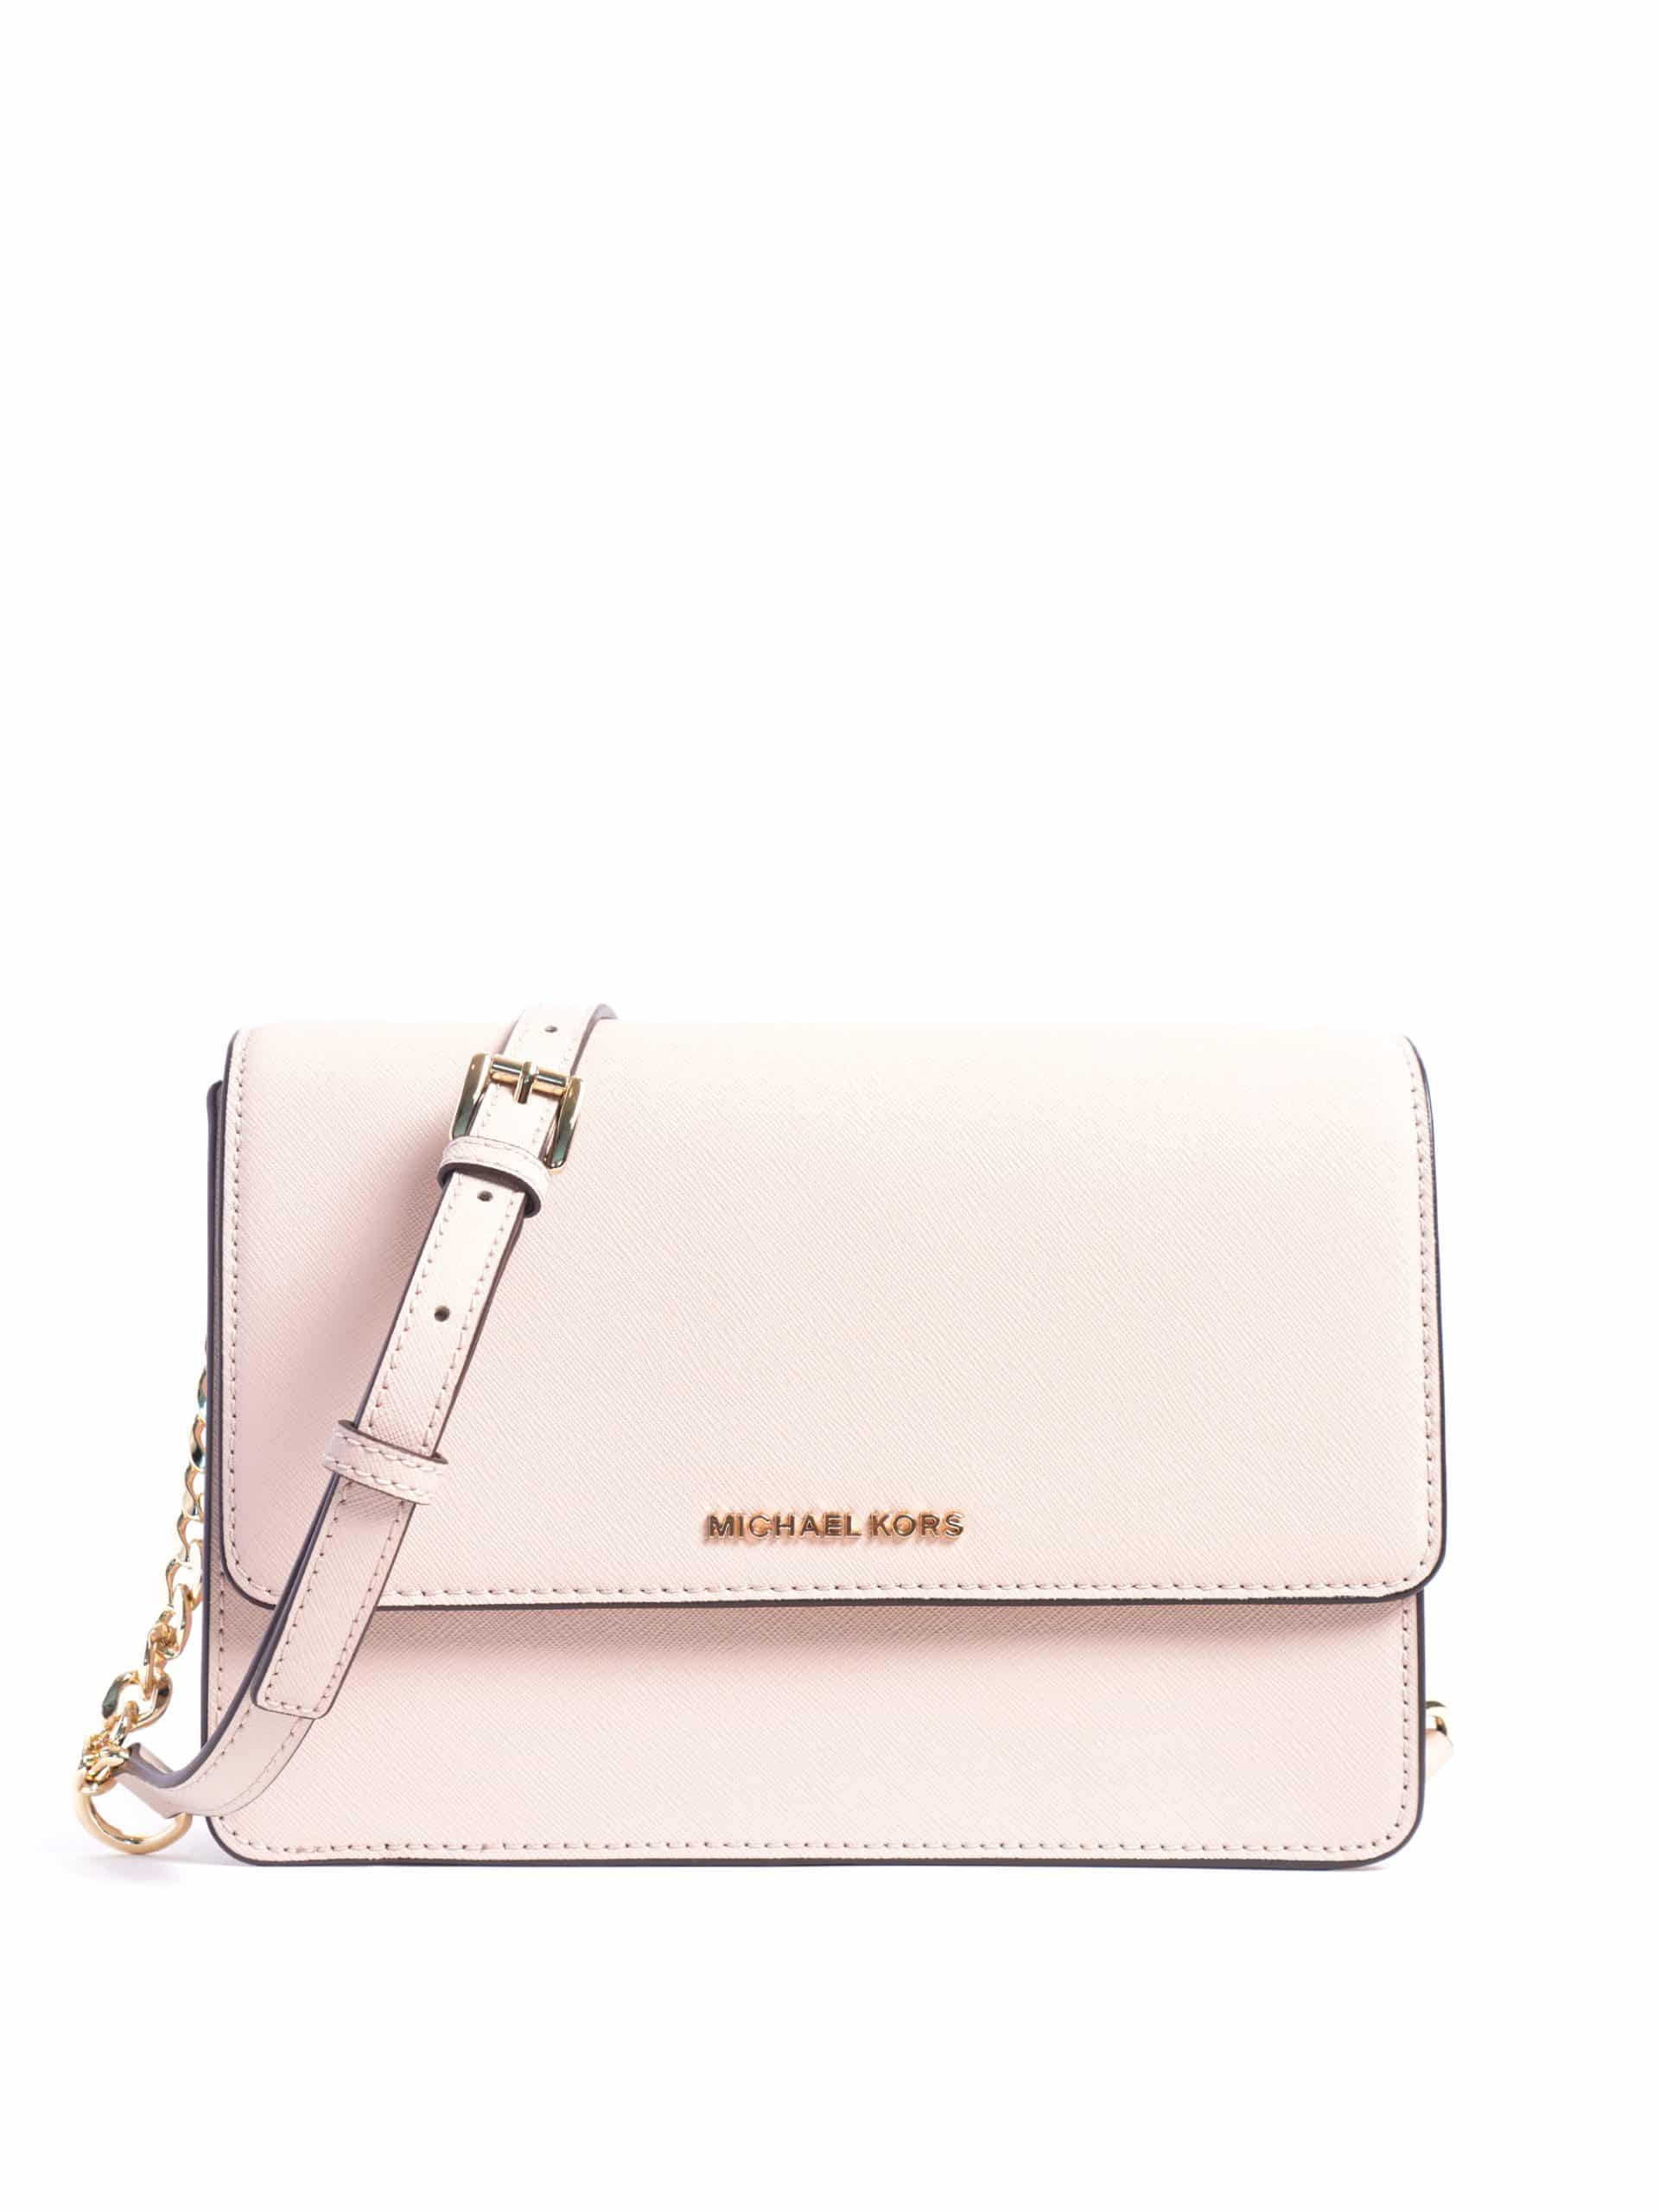 Michael Kors Daniela Saffiano Leather Large Soft Pink Handbag